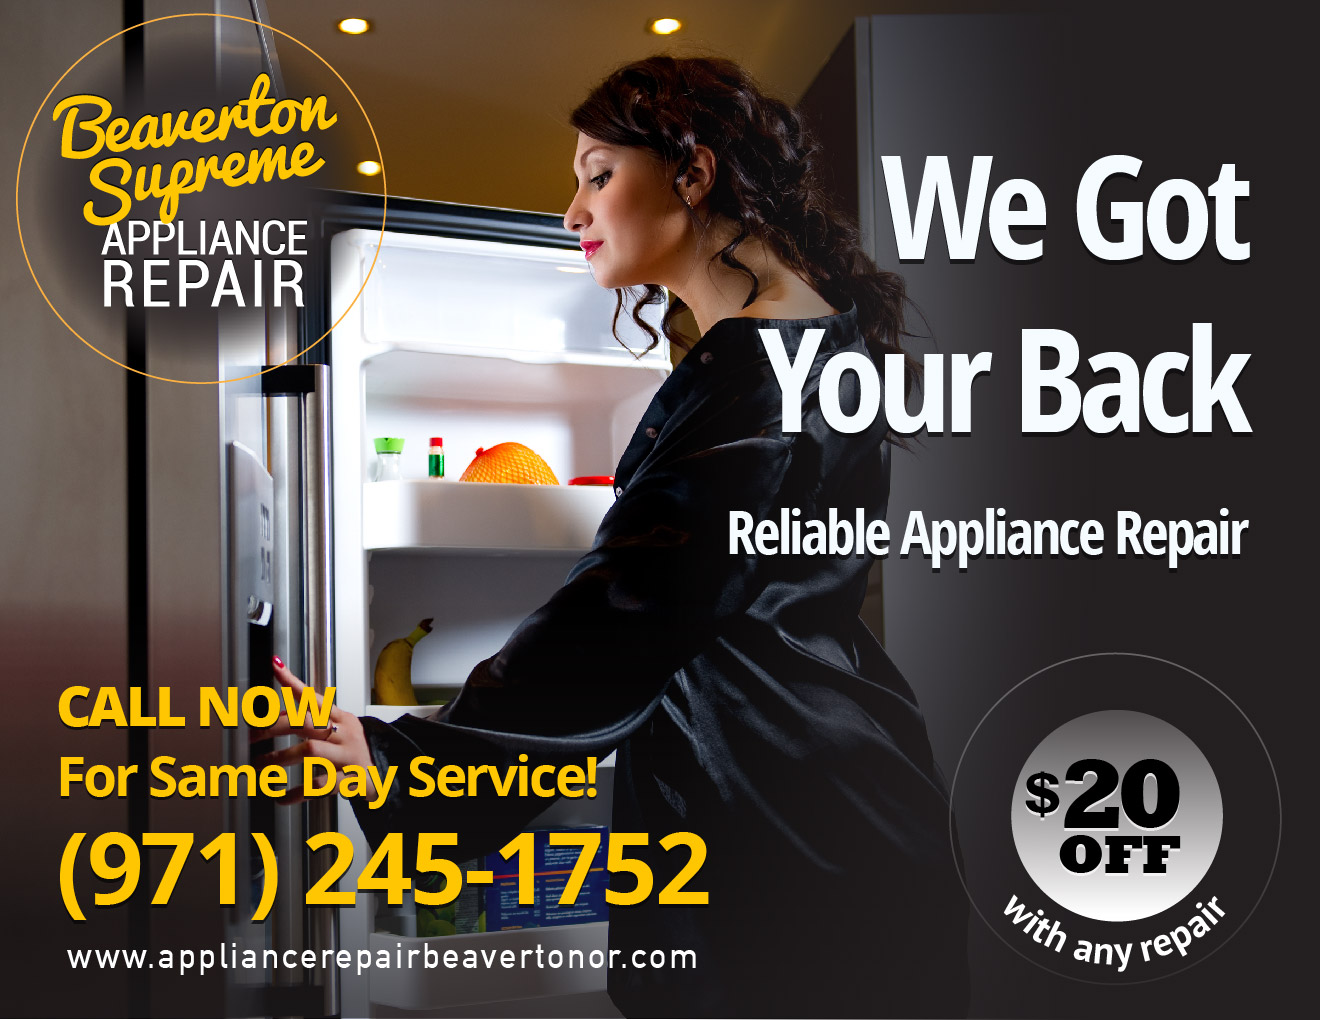 Beaverton Supreme Appliance Repair